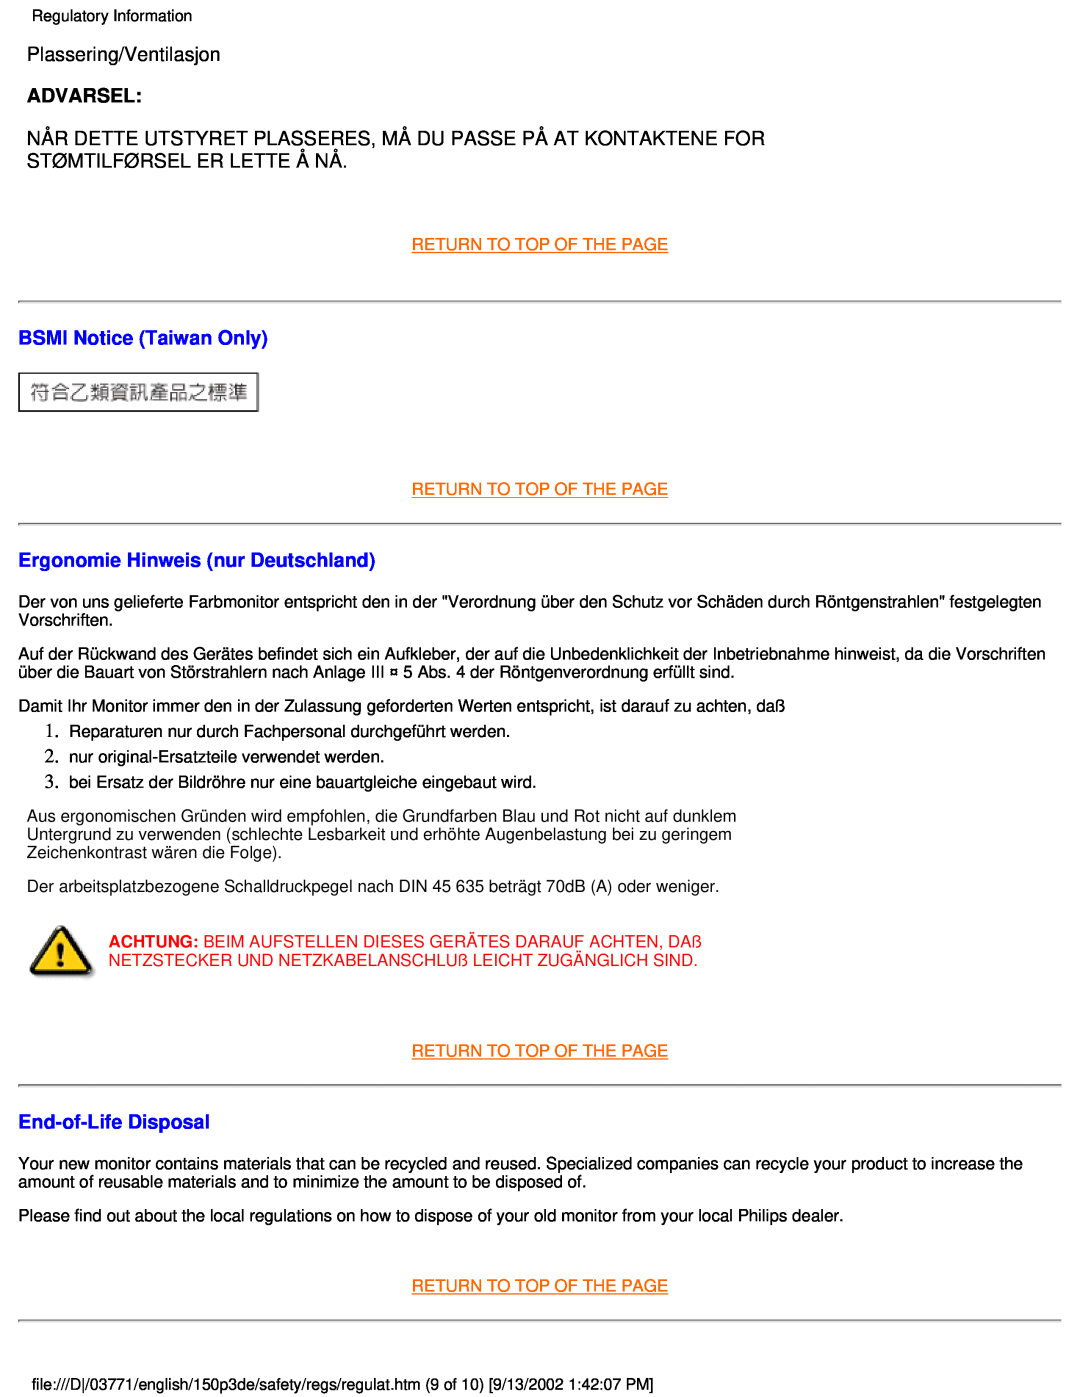 Philips 150P3E user manual Advarsel, BSMI Notice Taiwan Only, Ergonomie Hinweis nur Deutschland, End-of-Life Disposal 